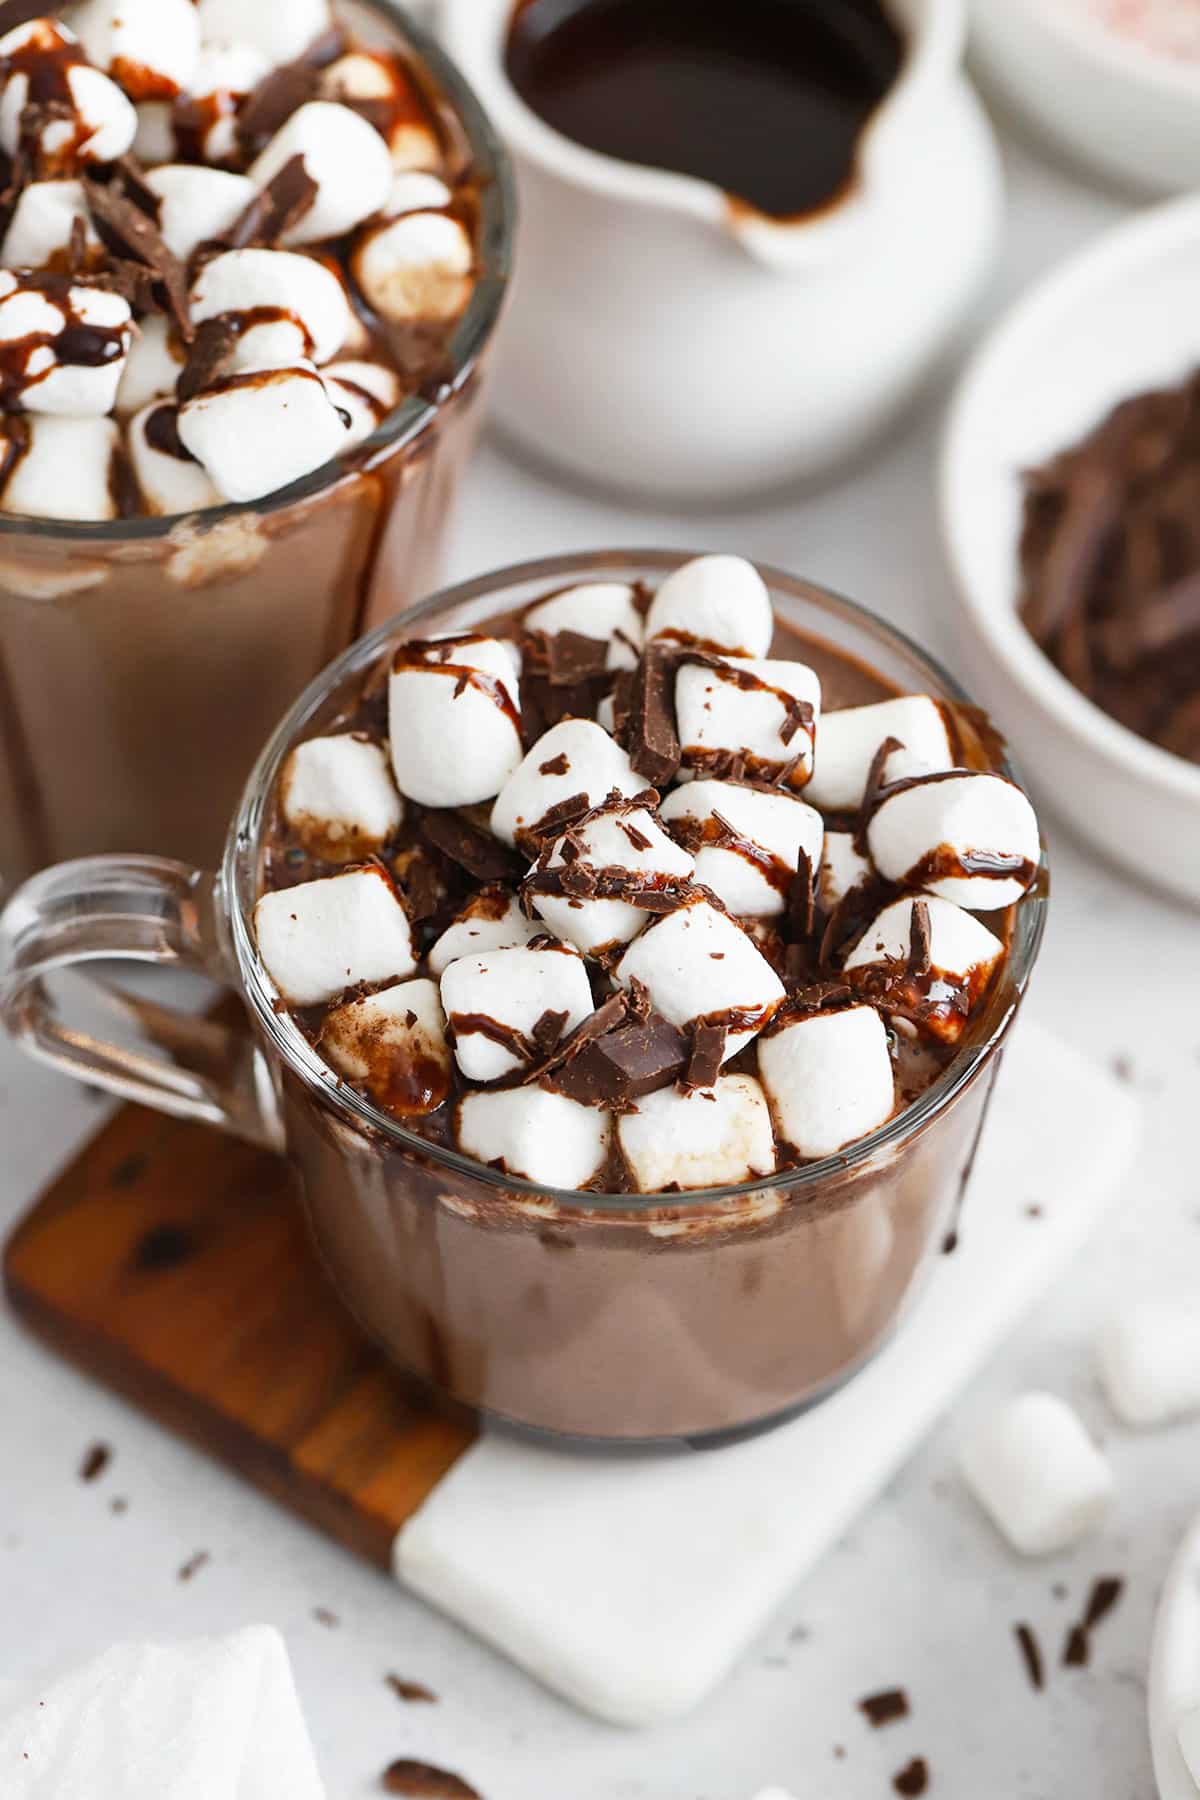 two glass mugs of gluten-free hot chocolate with marshmallows, chocolate syrup, and chocolate shavings